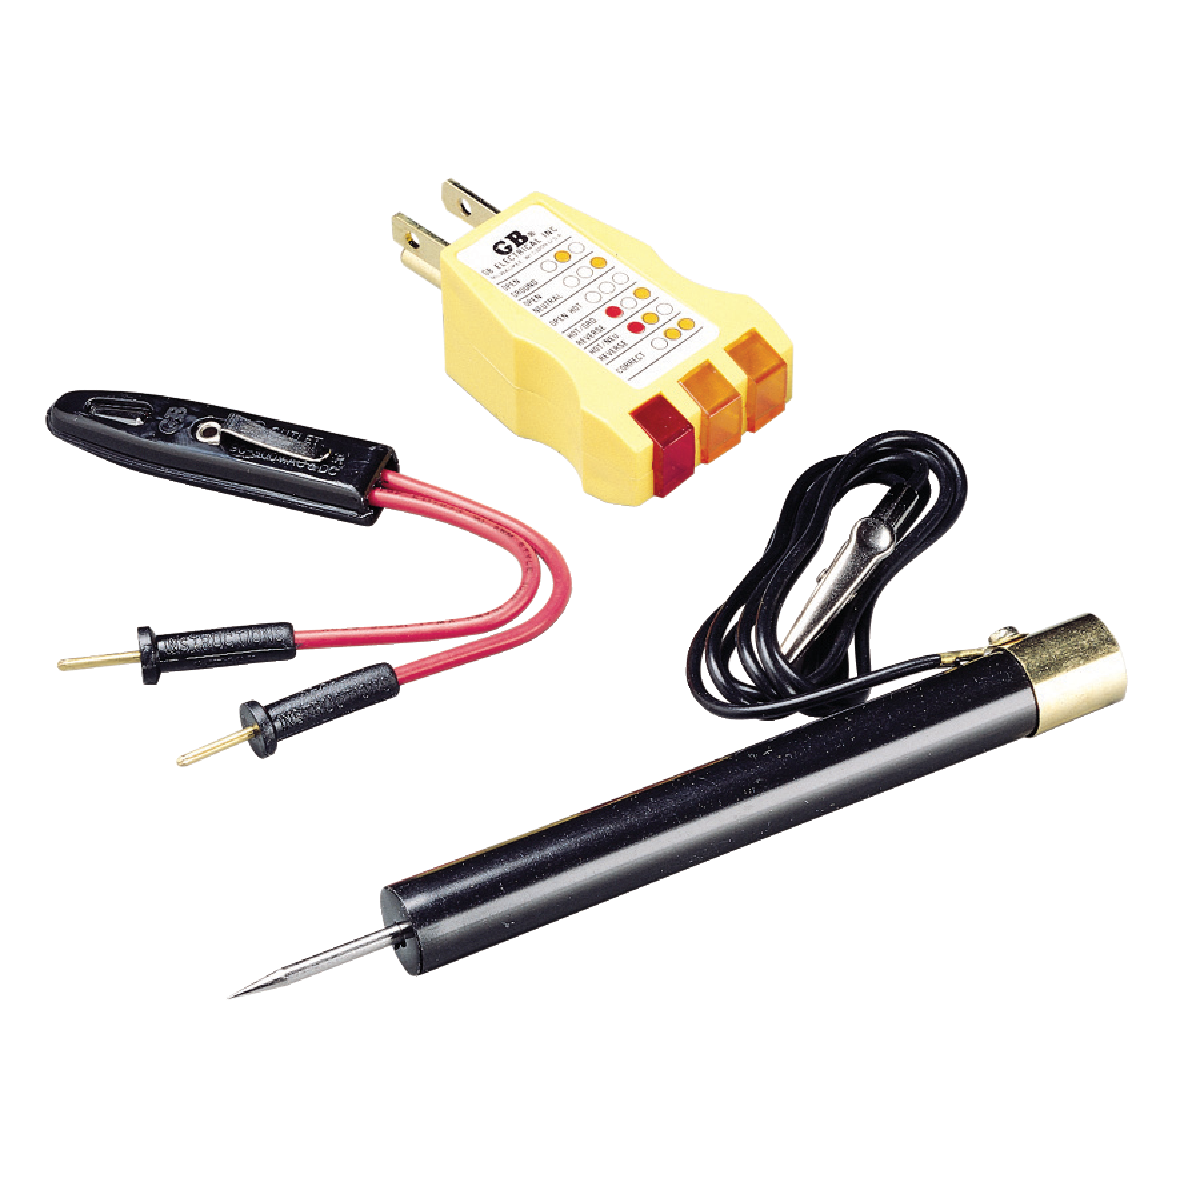 Electrical Tester Kit